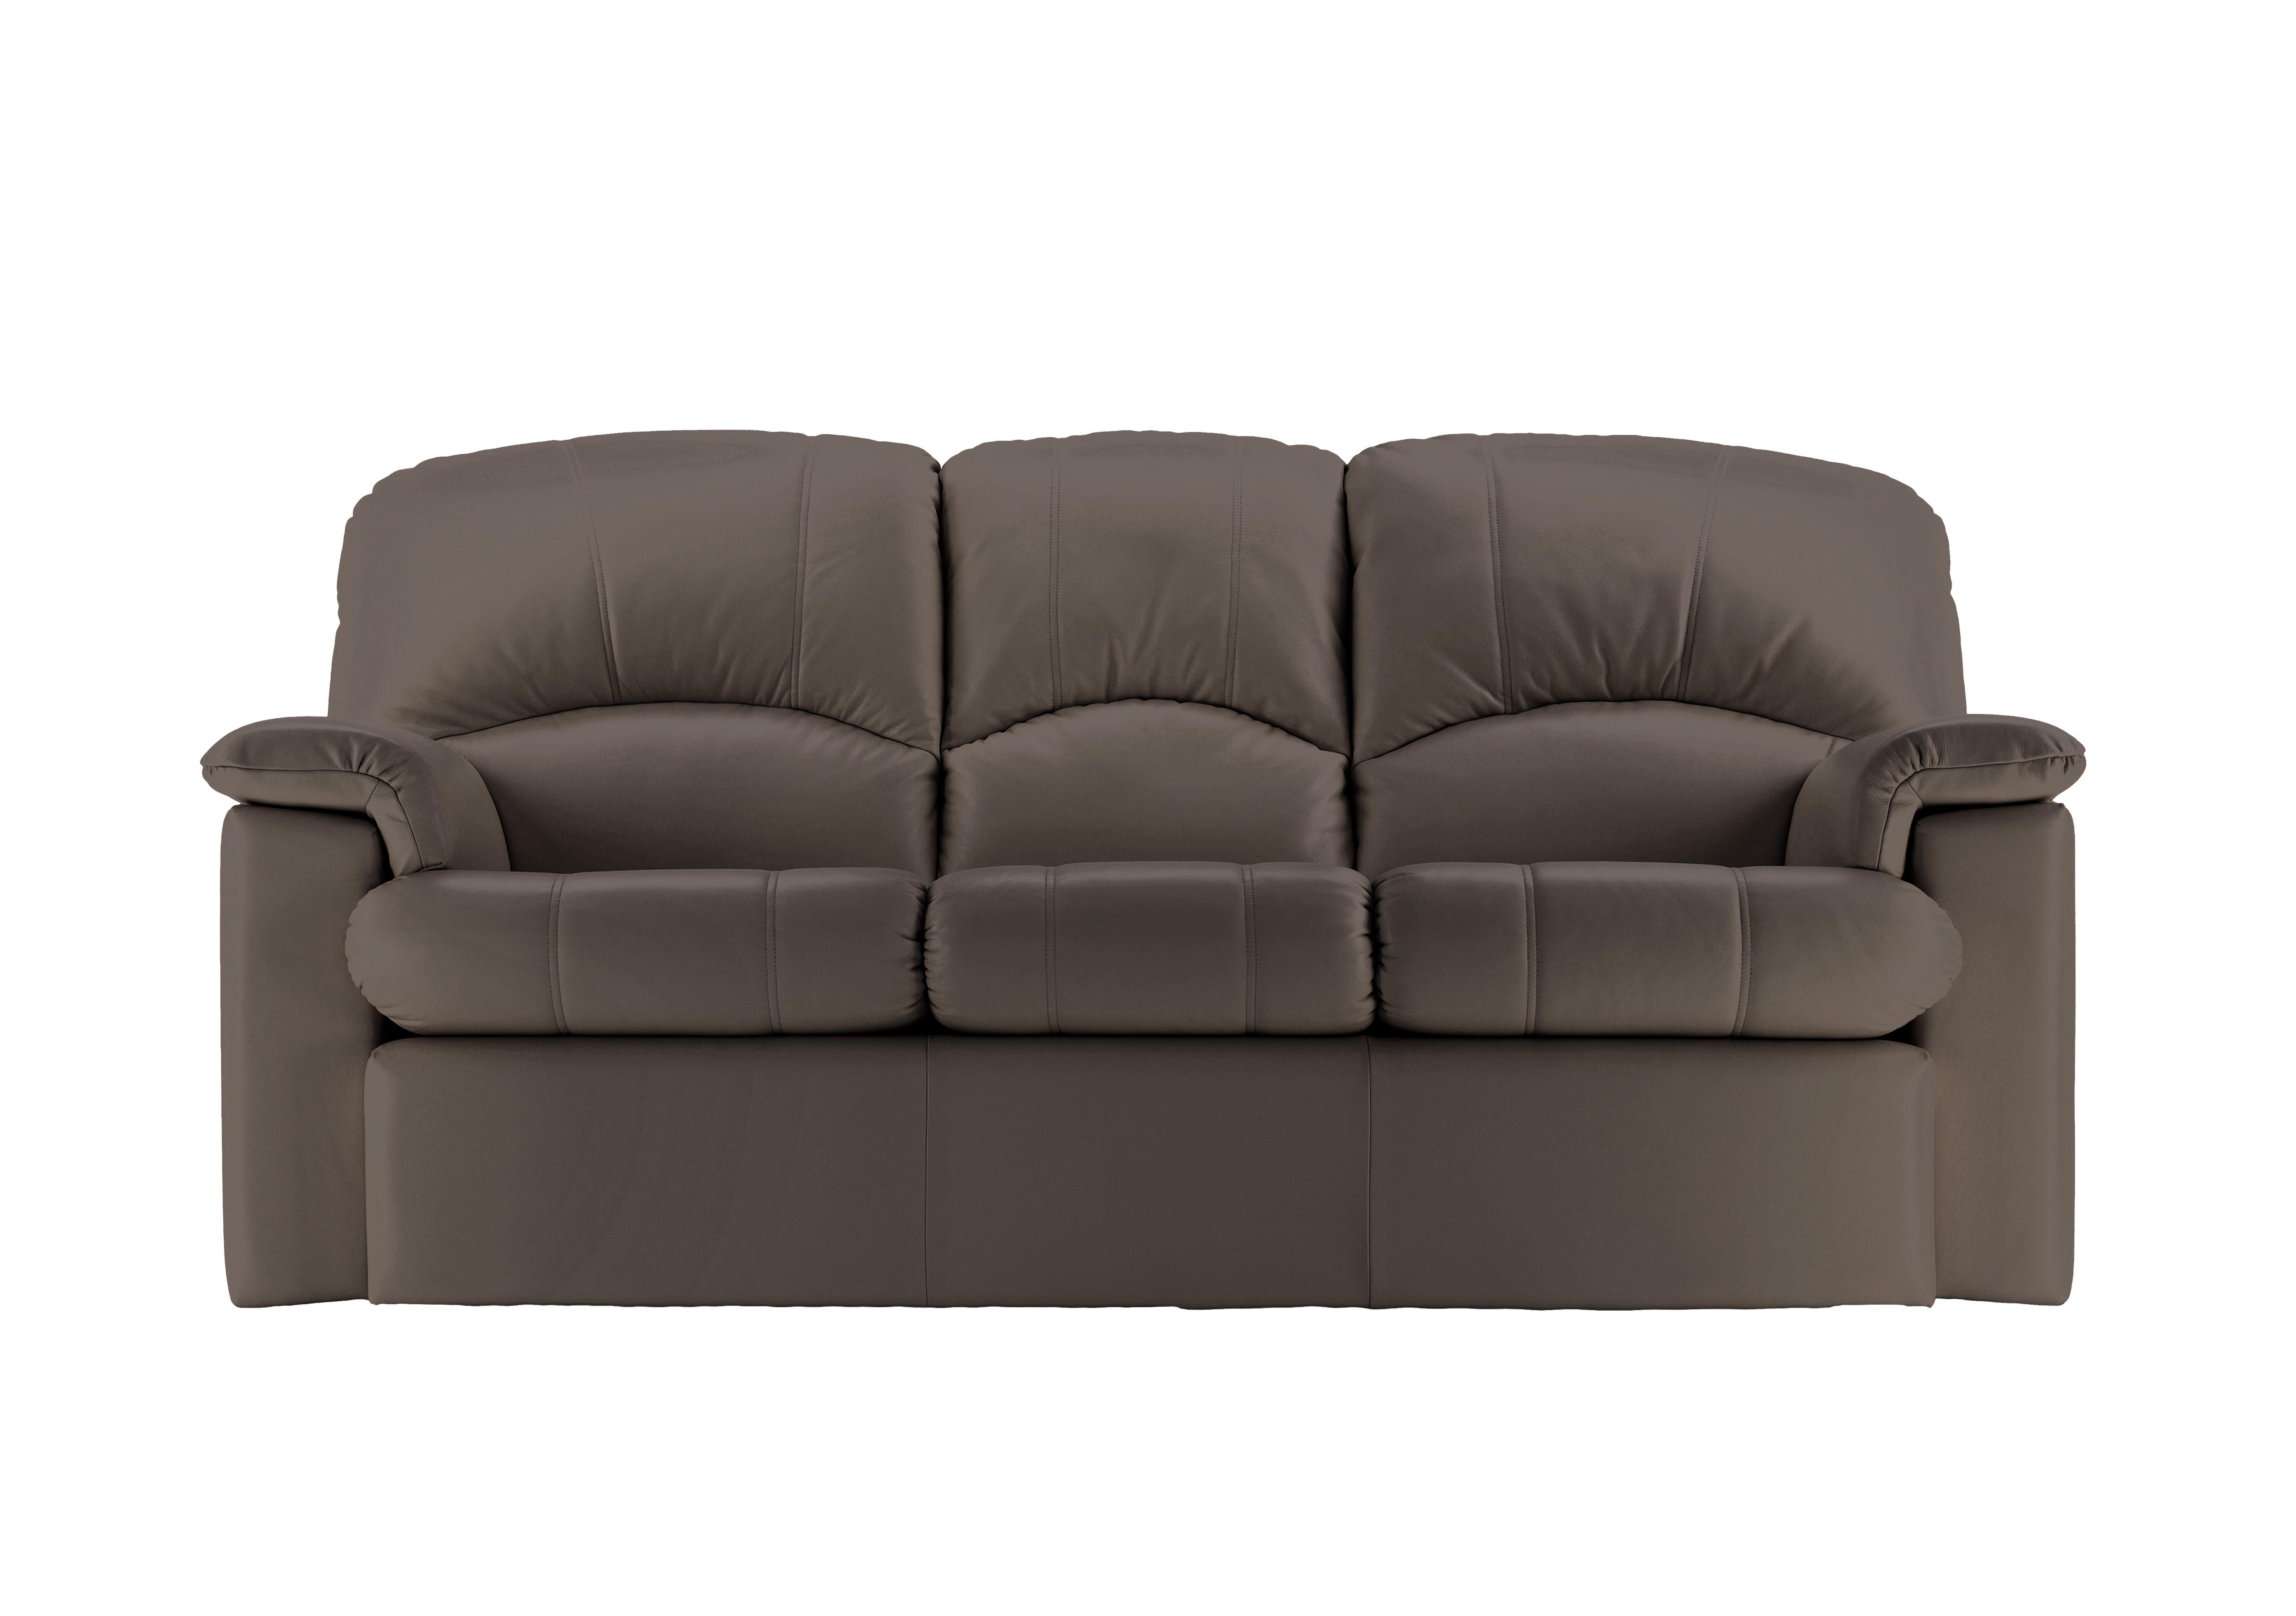 Chloe 3 Seater Leather Sofa in P232 Capri Taupe on Furniture Village